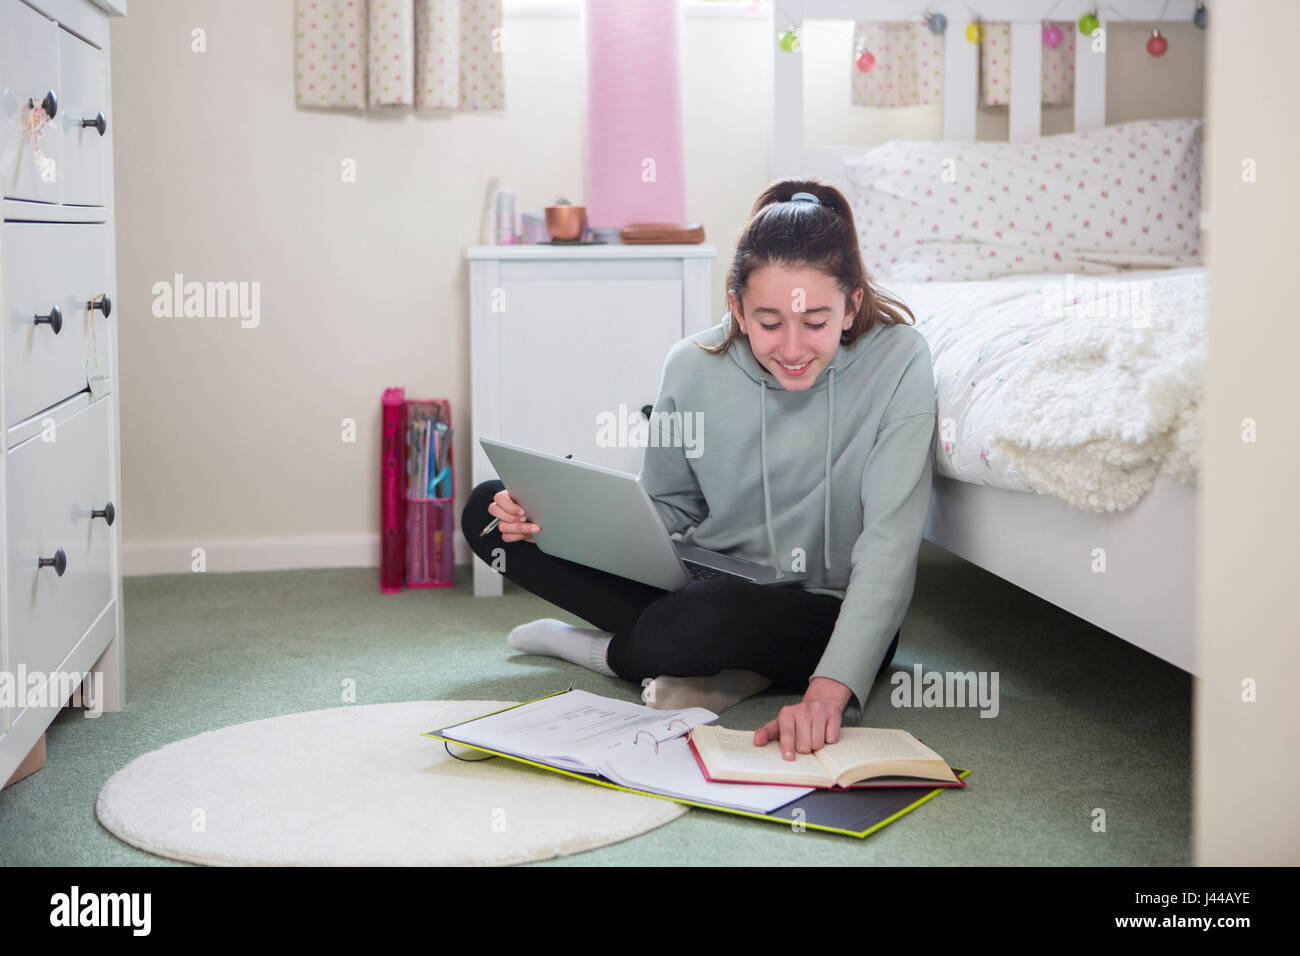 Young Girl Sitting On Floor Of Bedroom Doing Homework On Laptop Stock Photo